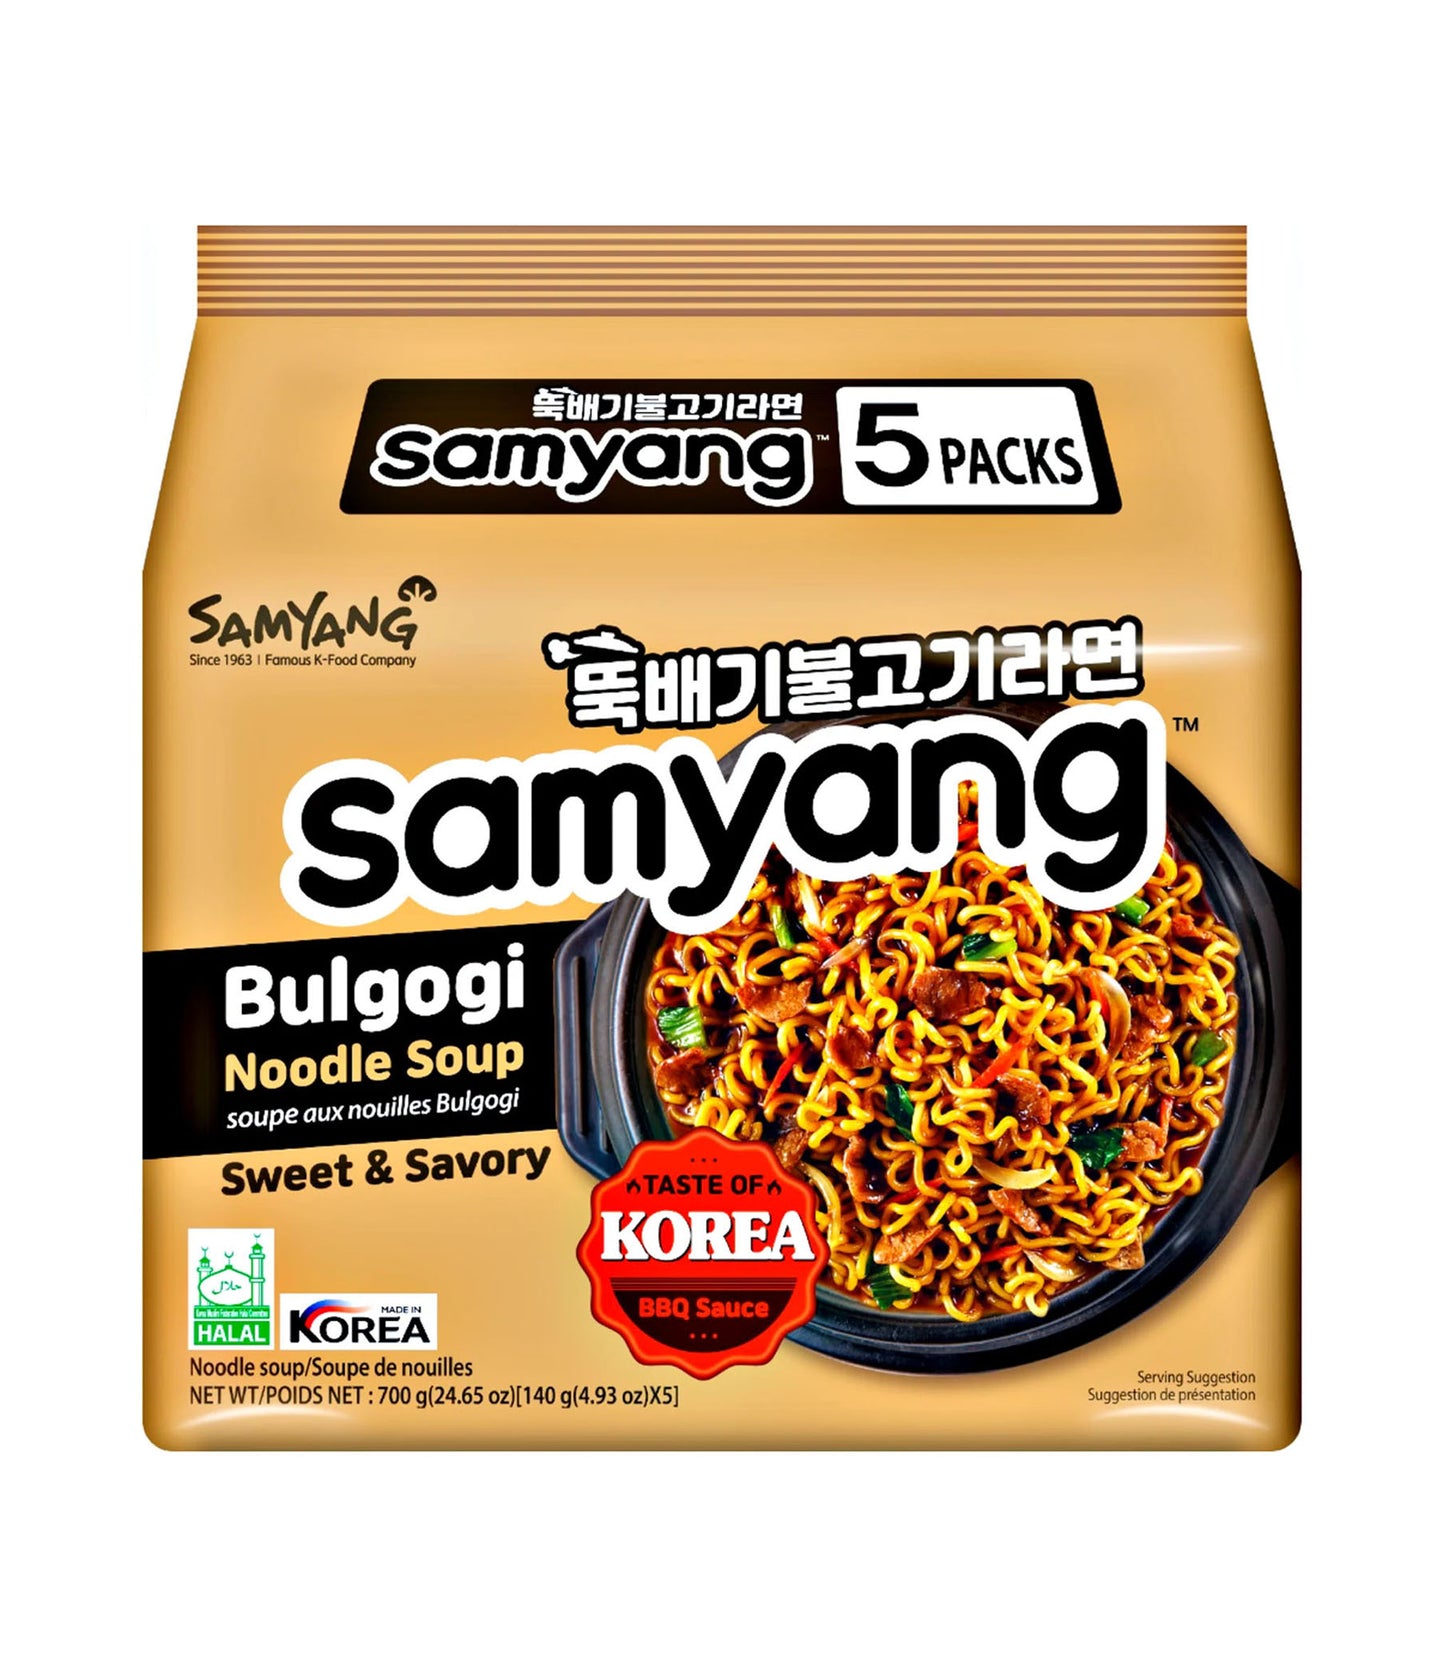 Samyang Bulgogi Noodle Soup